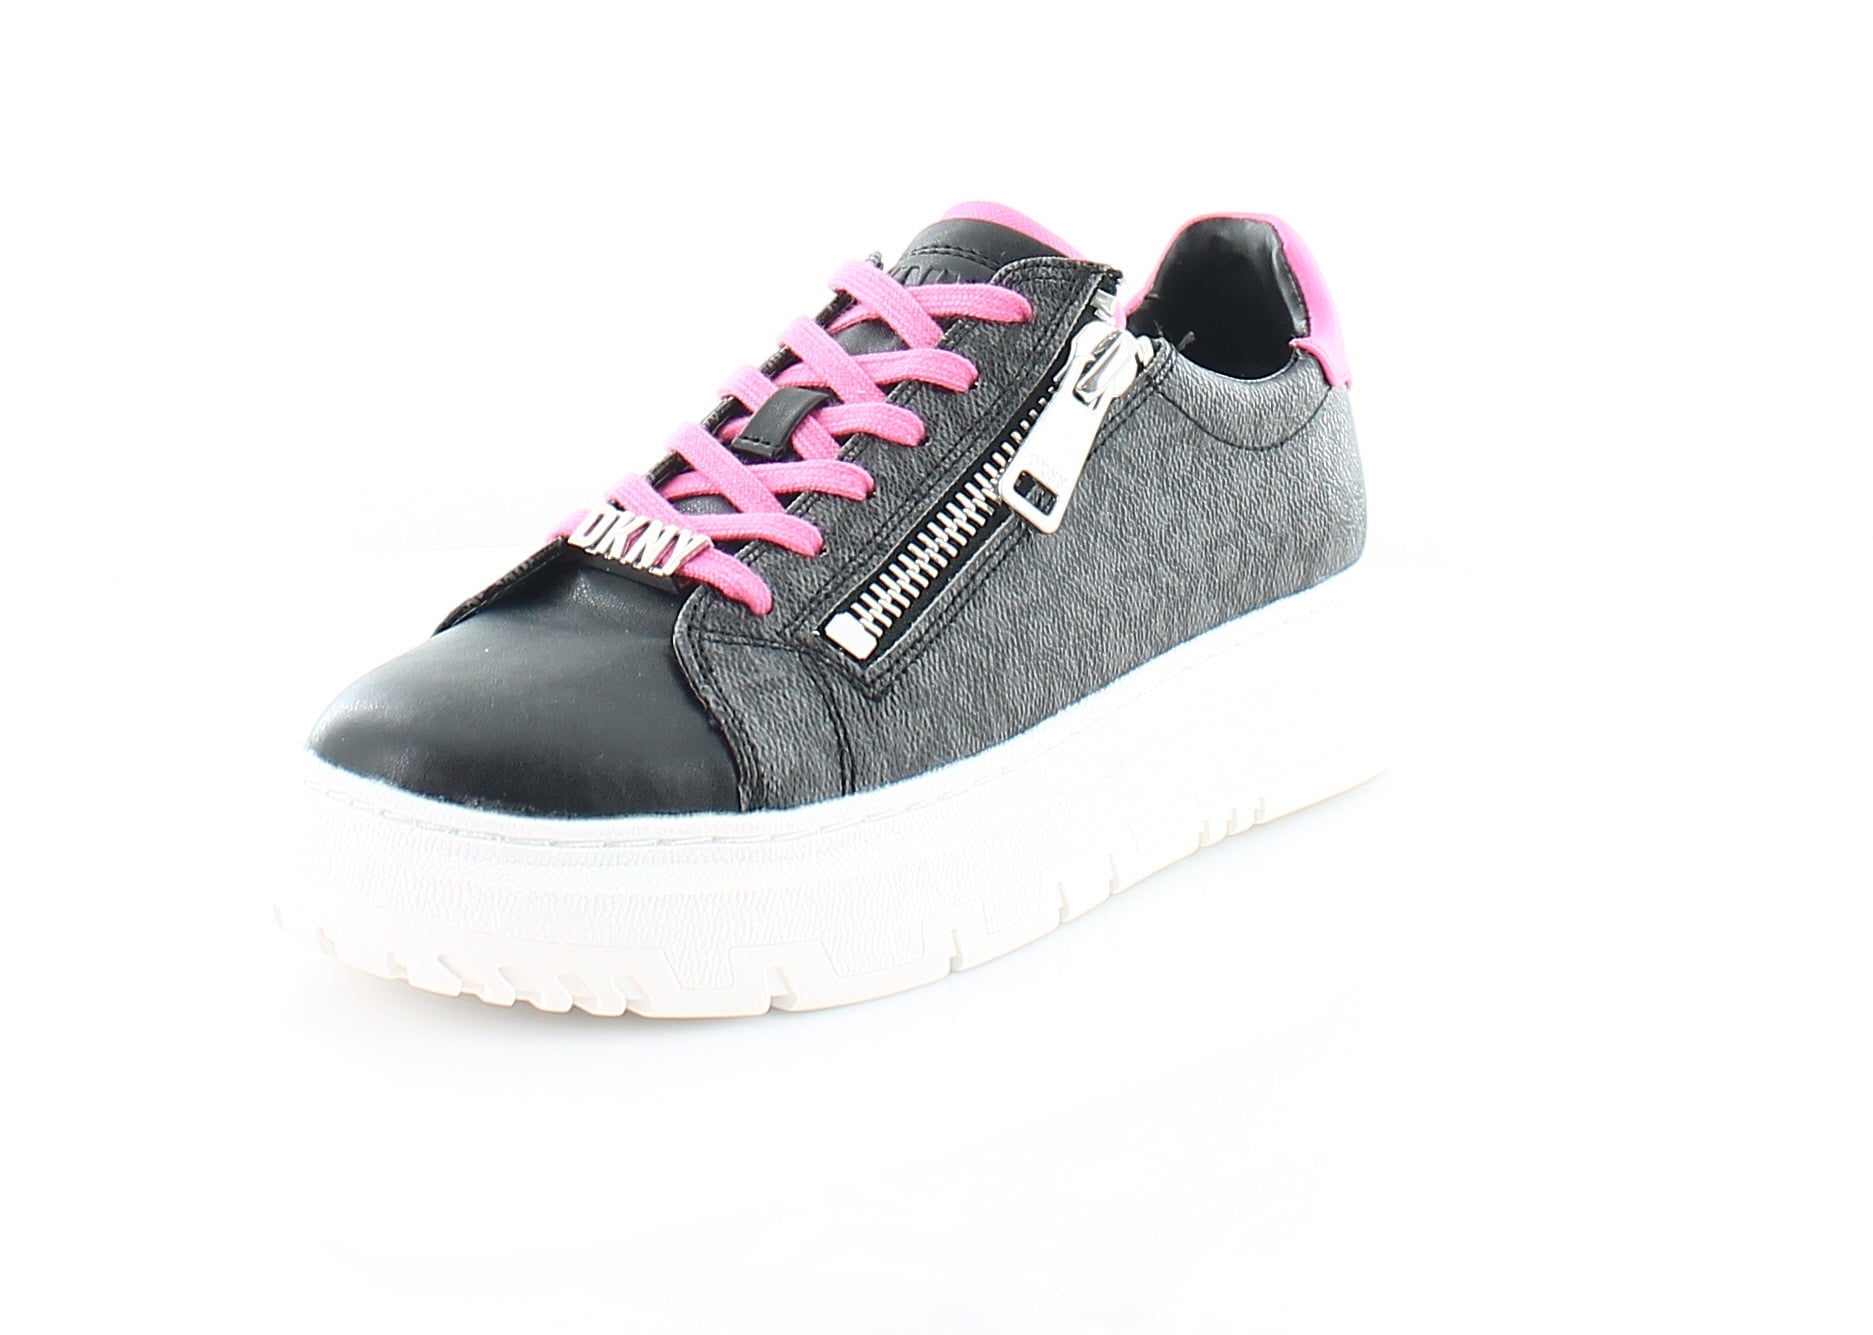 DKNY Matti Fashion Black/Pink Size 9 M - Walmart.com